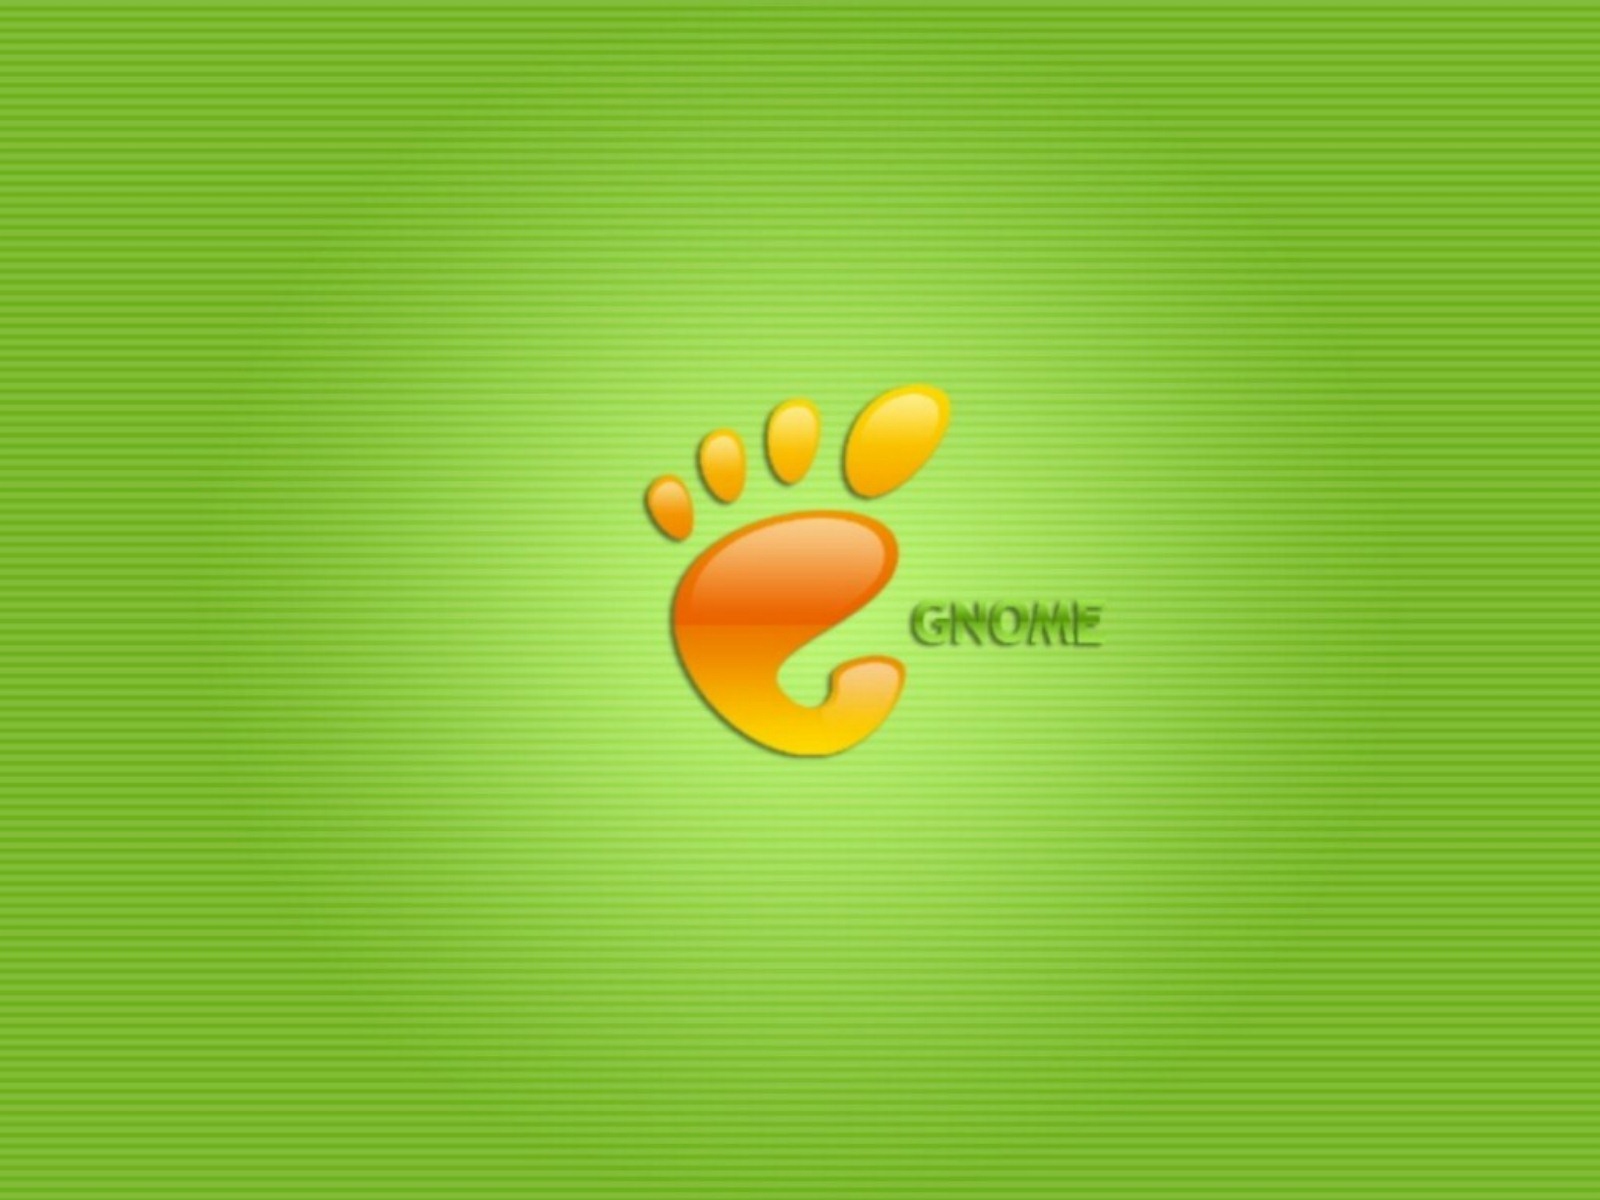 Gnome Desktop Environment iPhone HD Wallpaper Car Pictures